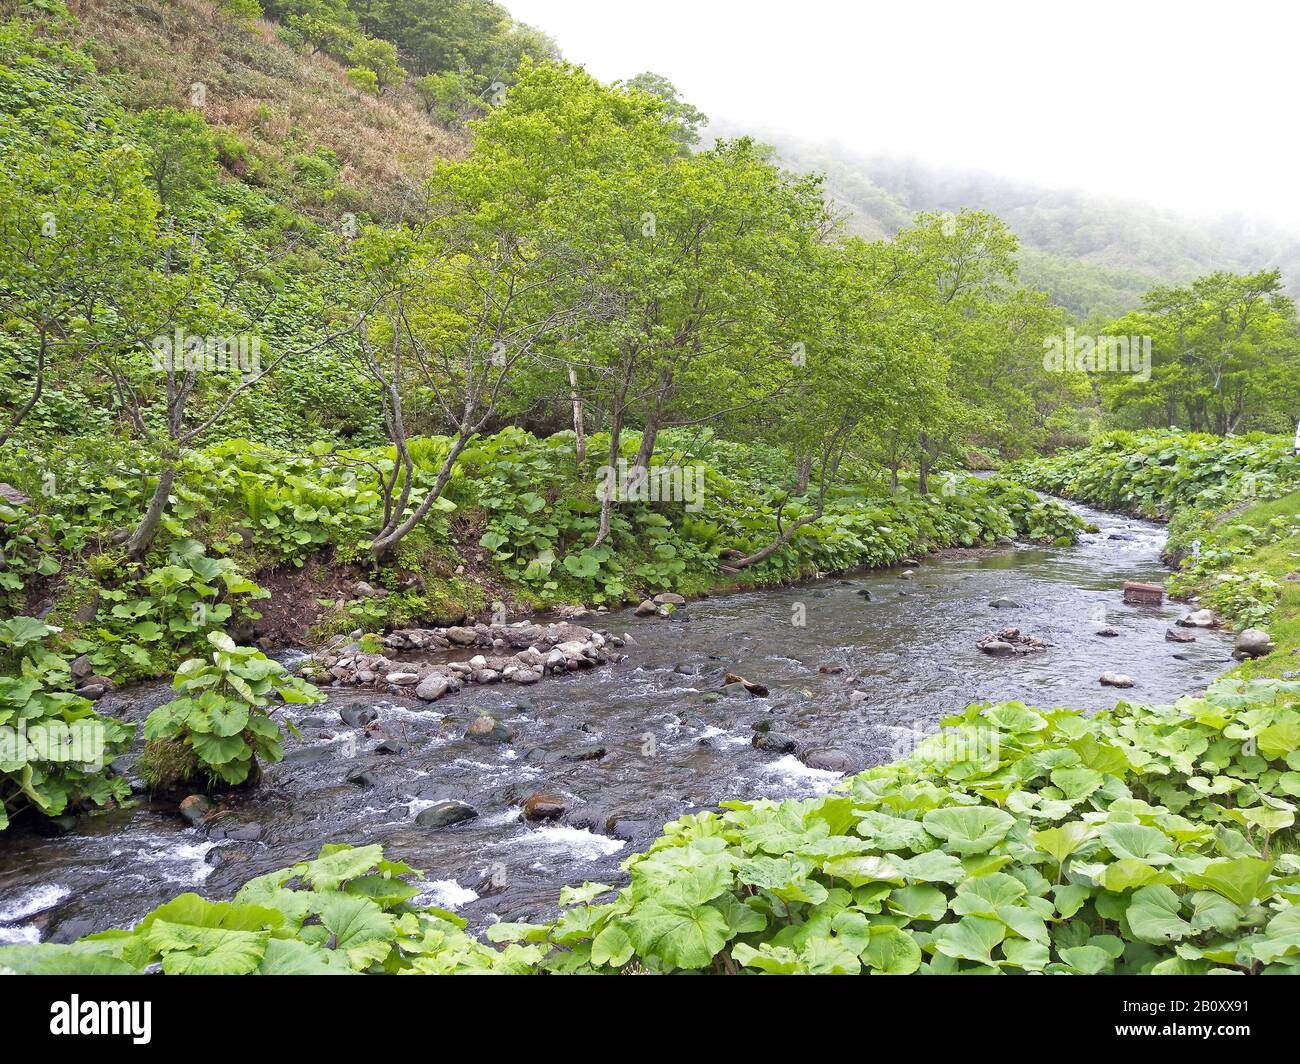 Rausu river, Japan Stock Photo